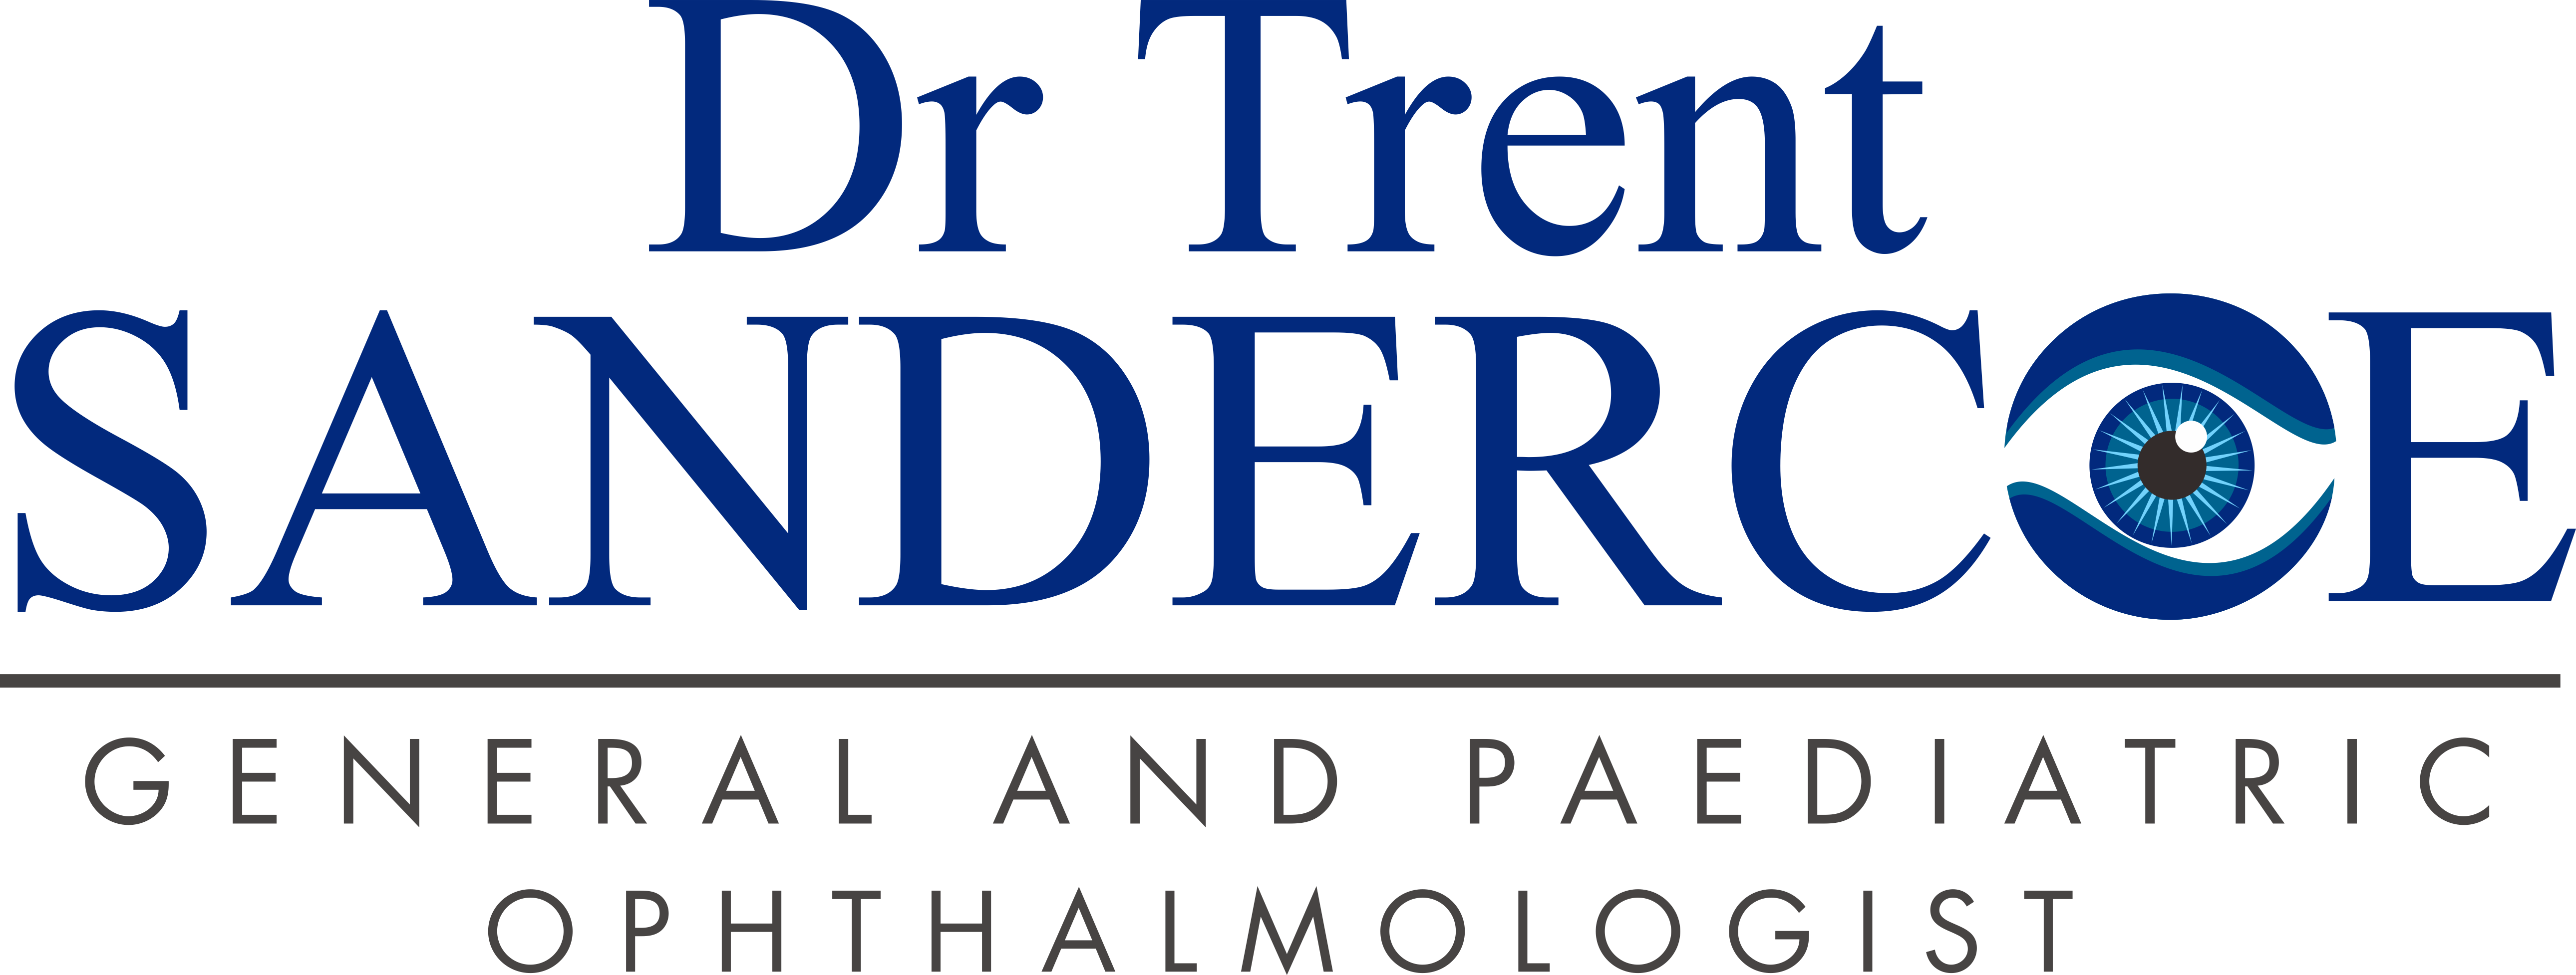 Dr Trent Sandercoe